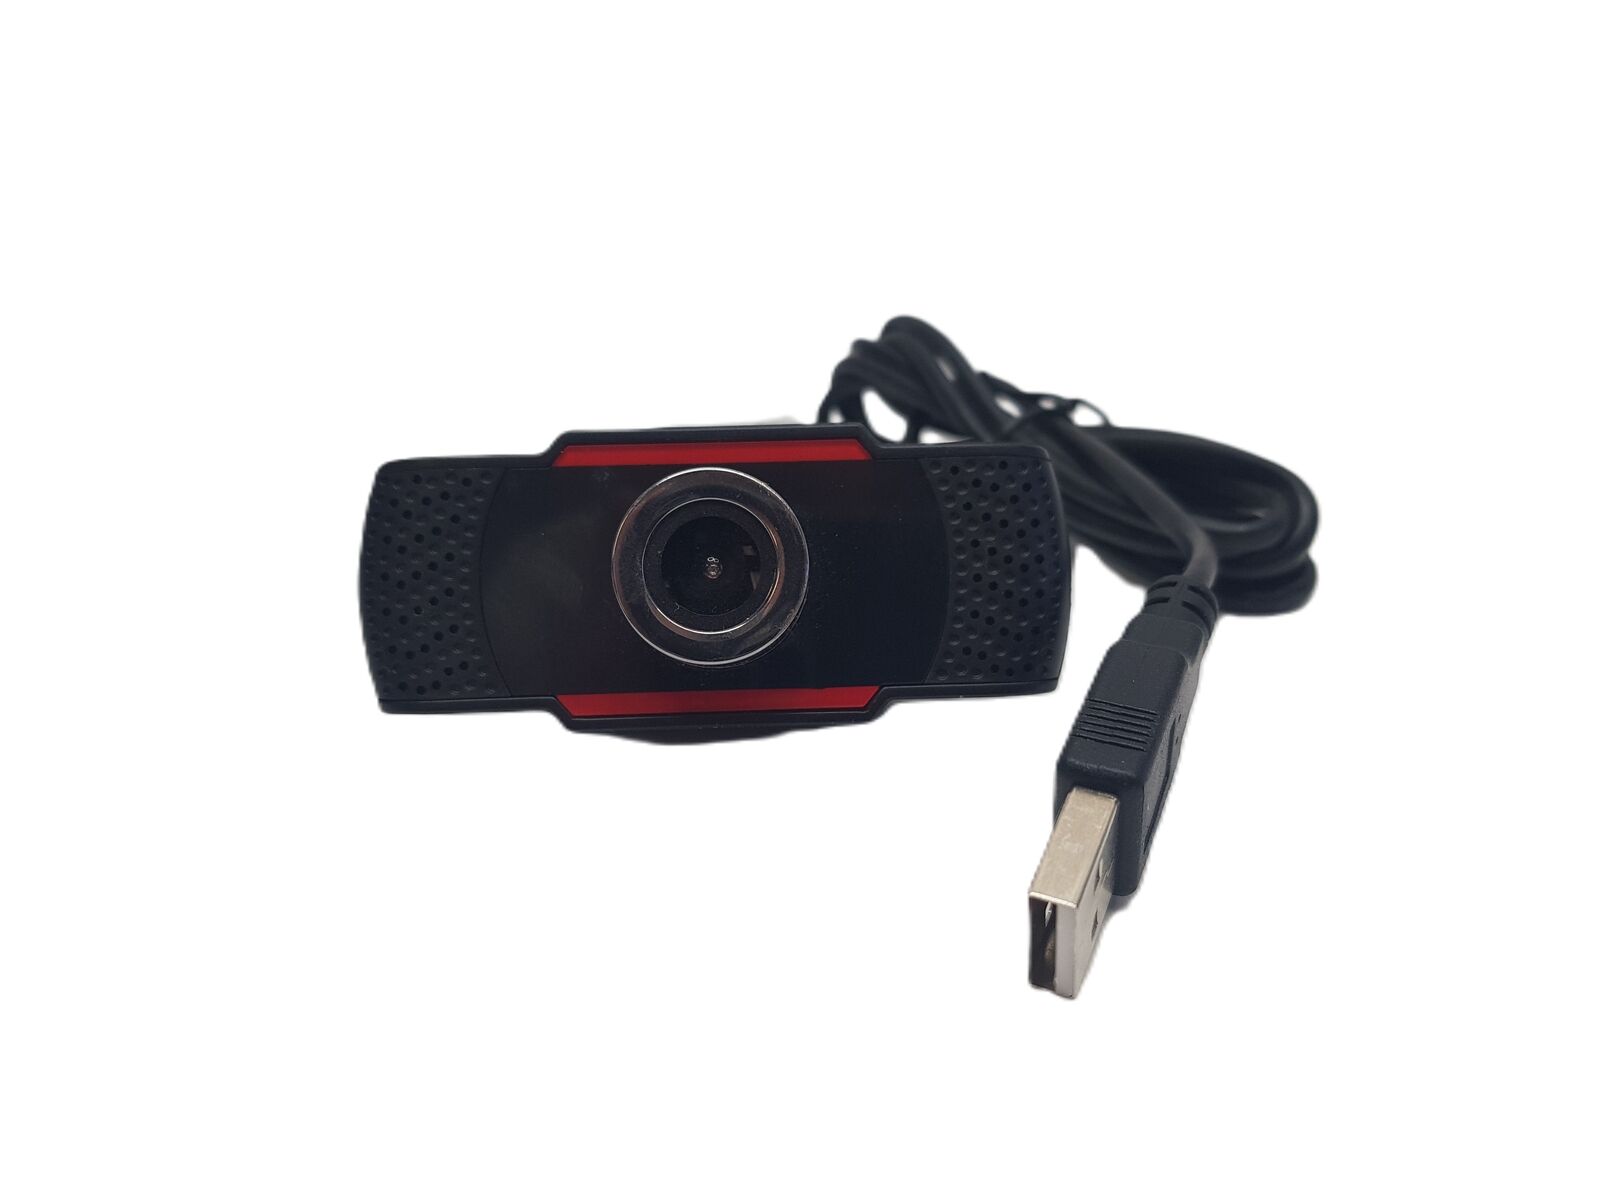 Adesso CyberTrack H3 720P USB Webcam Build in Microphone